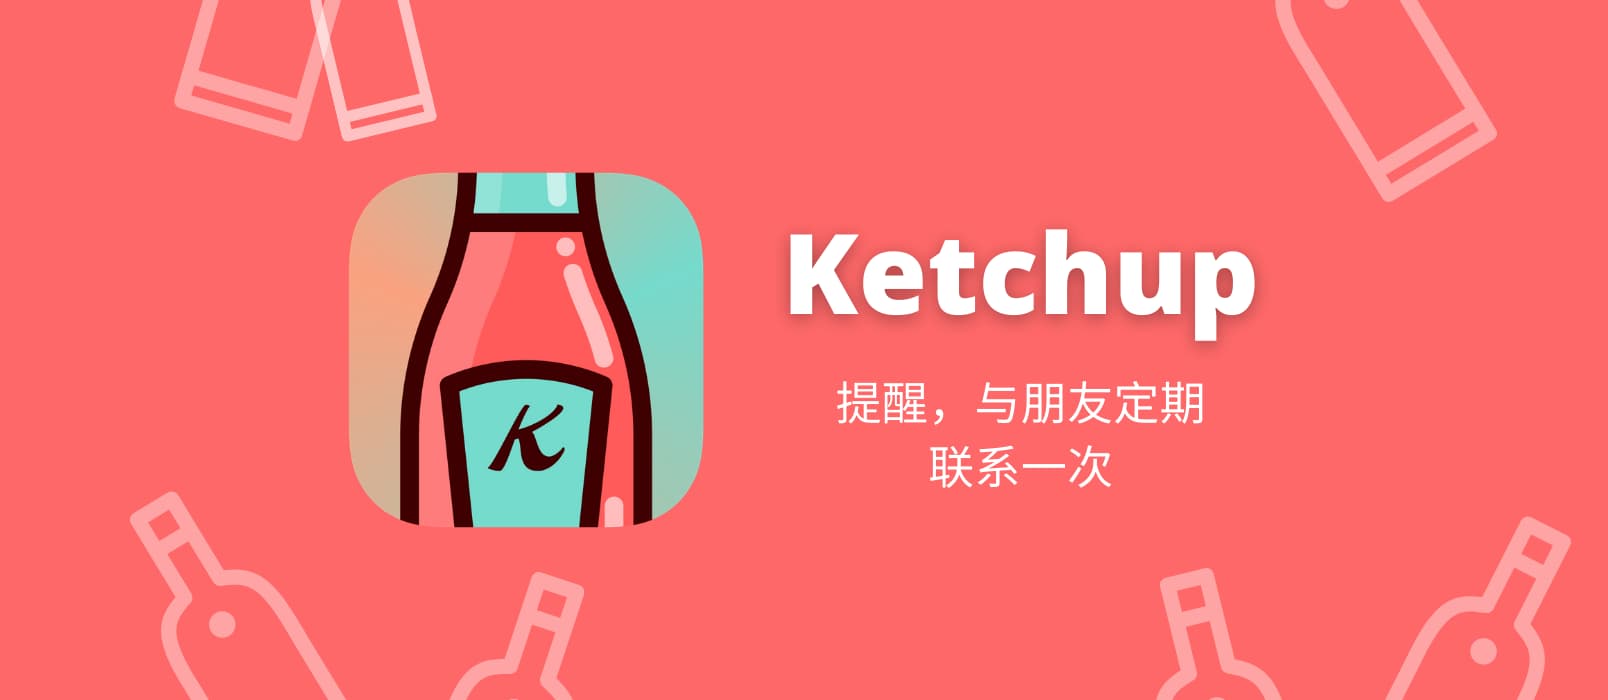 Ketchup - 将“和朋友保持联系”这句空话，变成现实[iPhone]